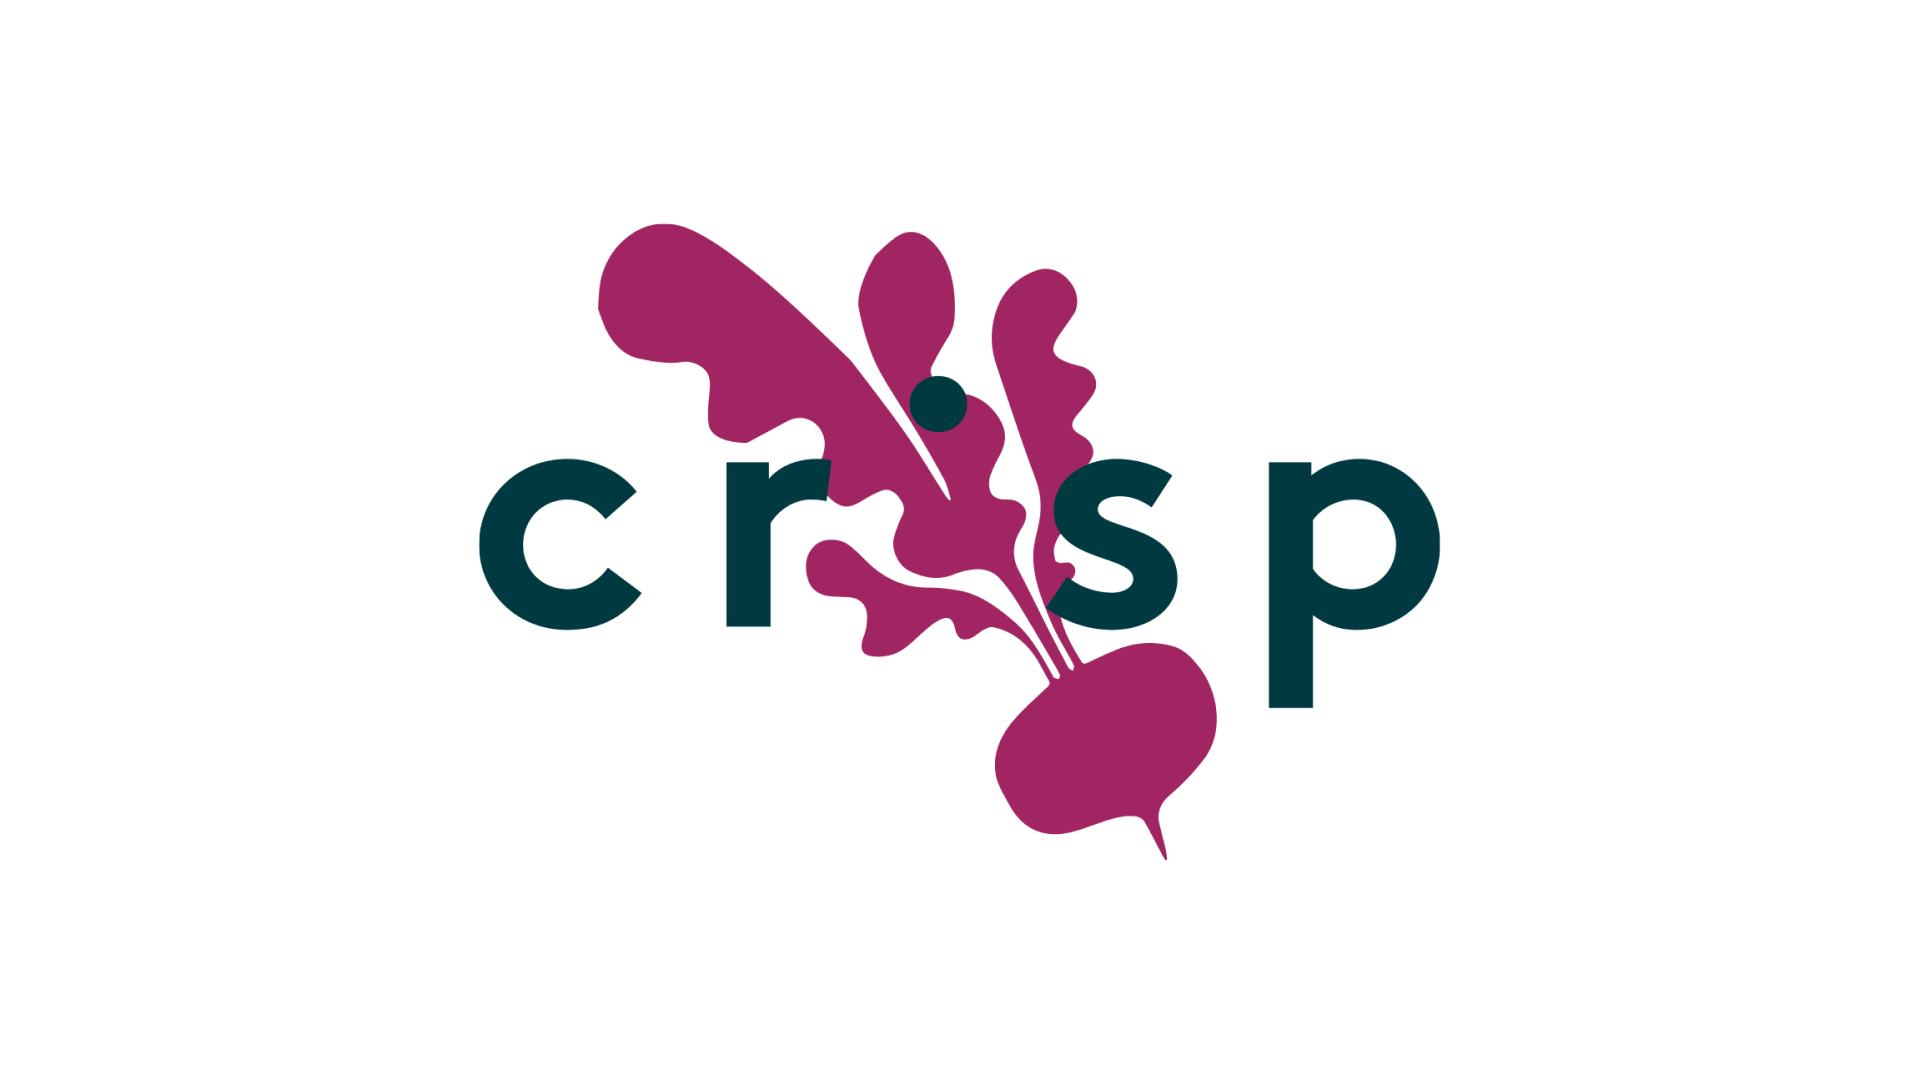 Crisp logo with beetroot